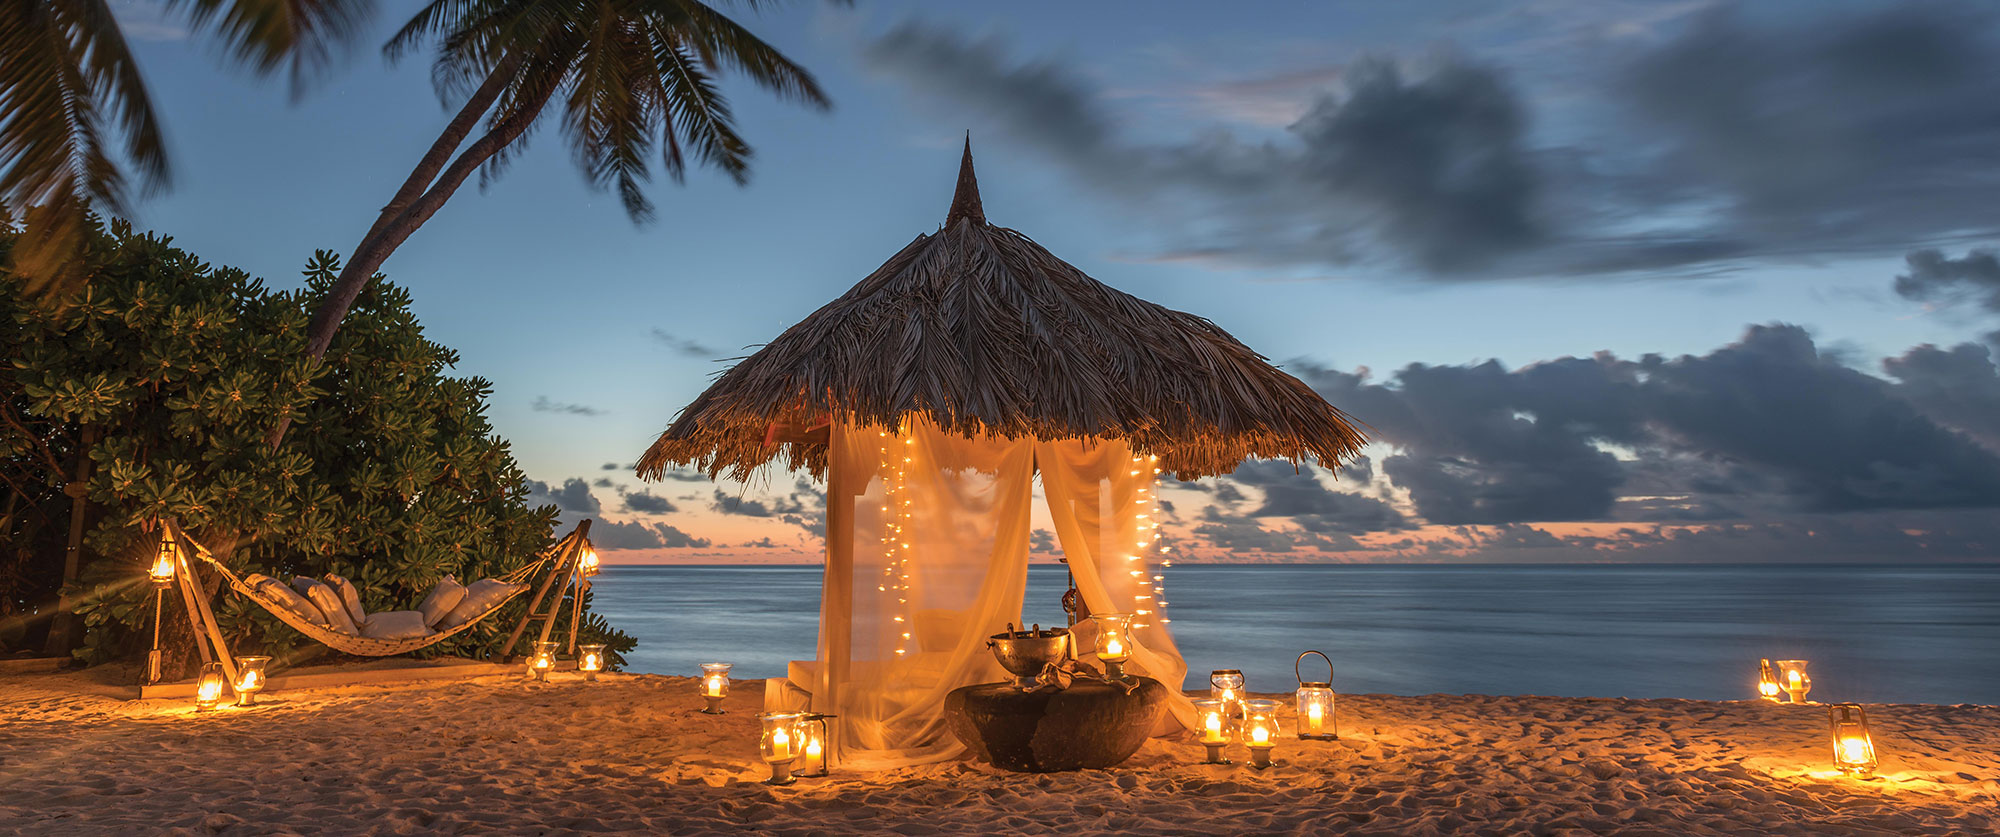 Luxury Honeymoon Package Seychelles Includes Airfare